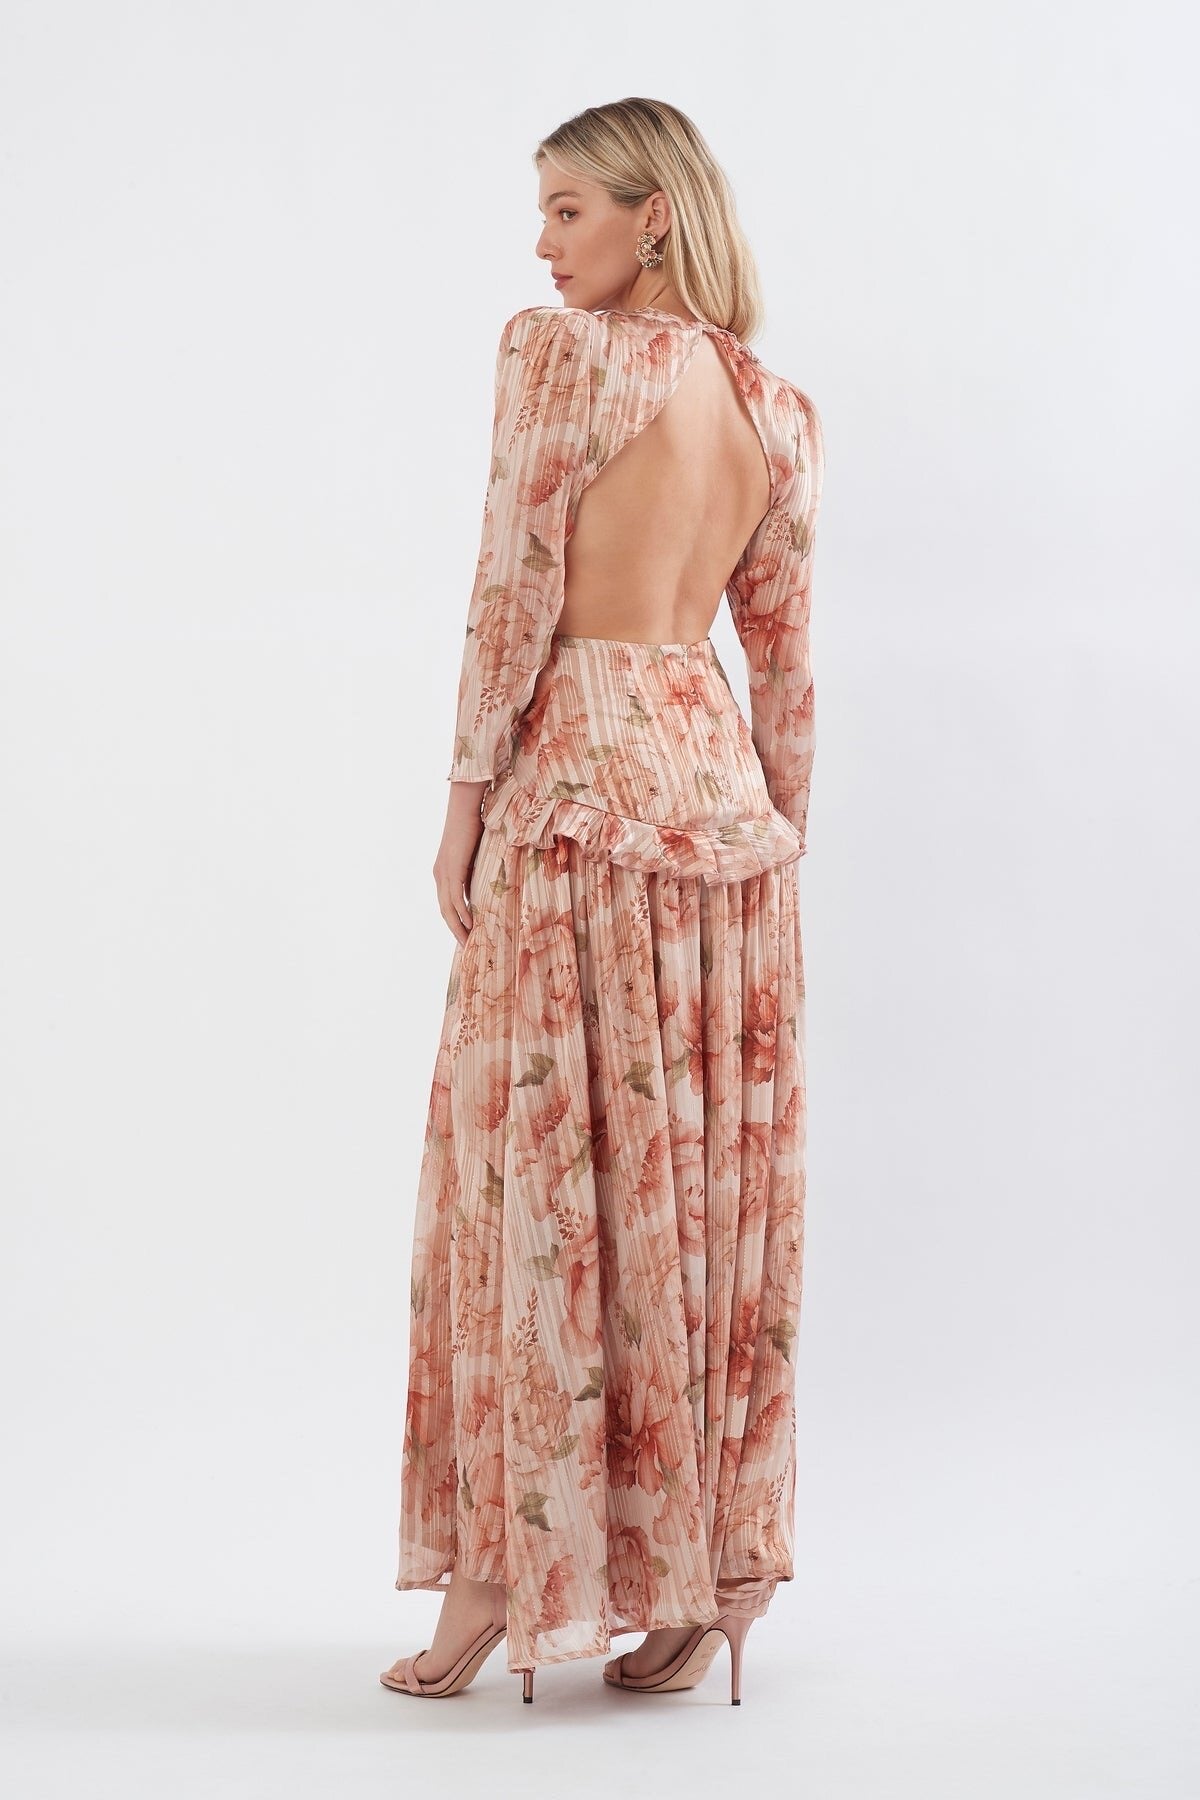 SONYA - Ruffle Cutout Maxi Dress - Peach